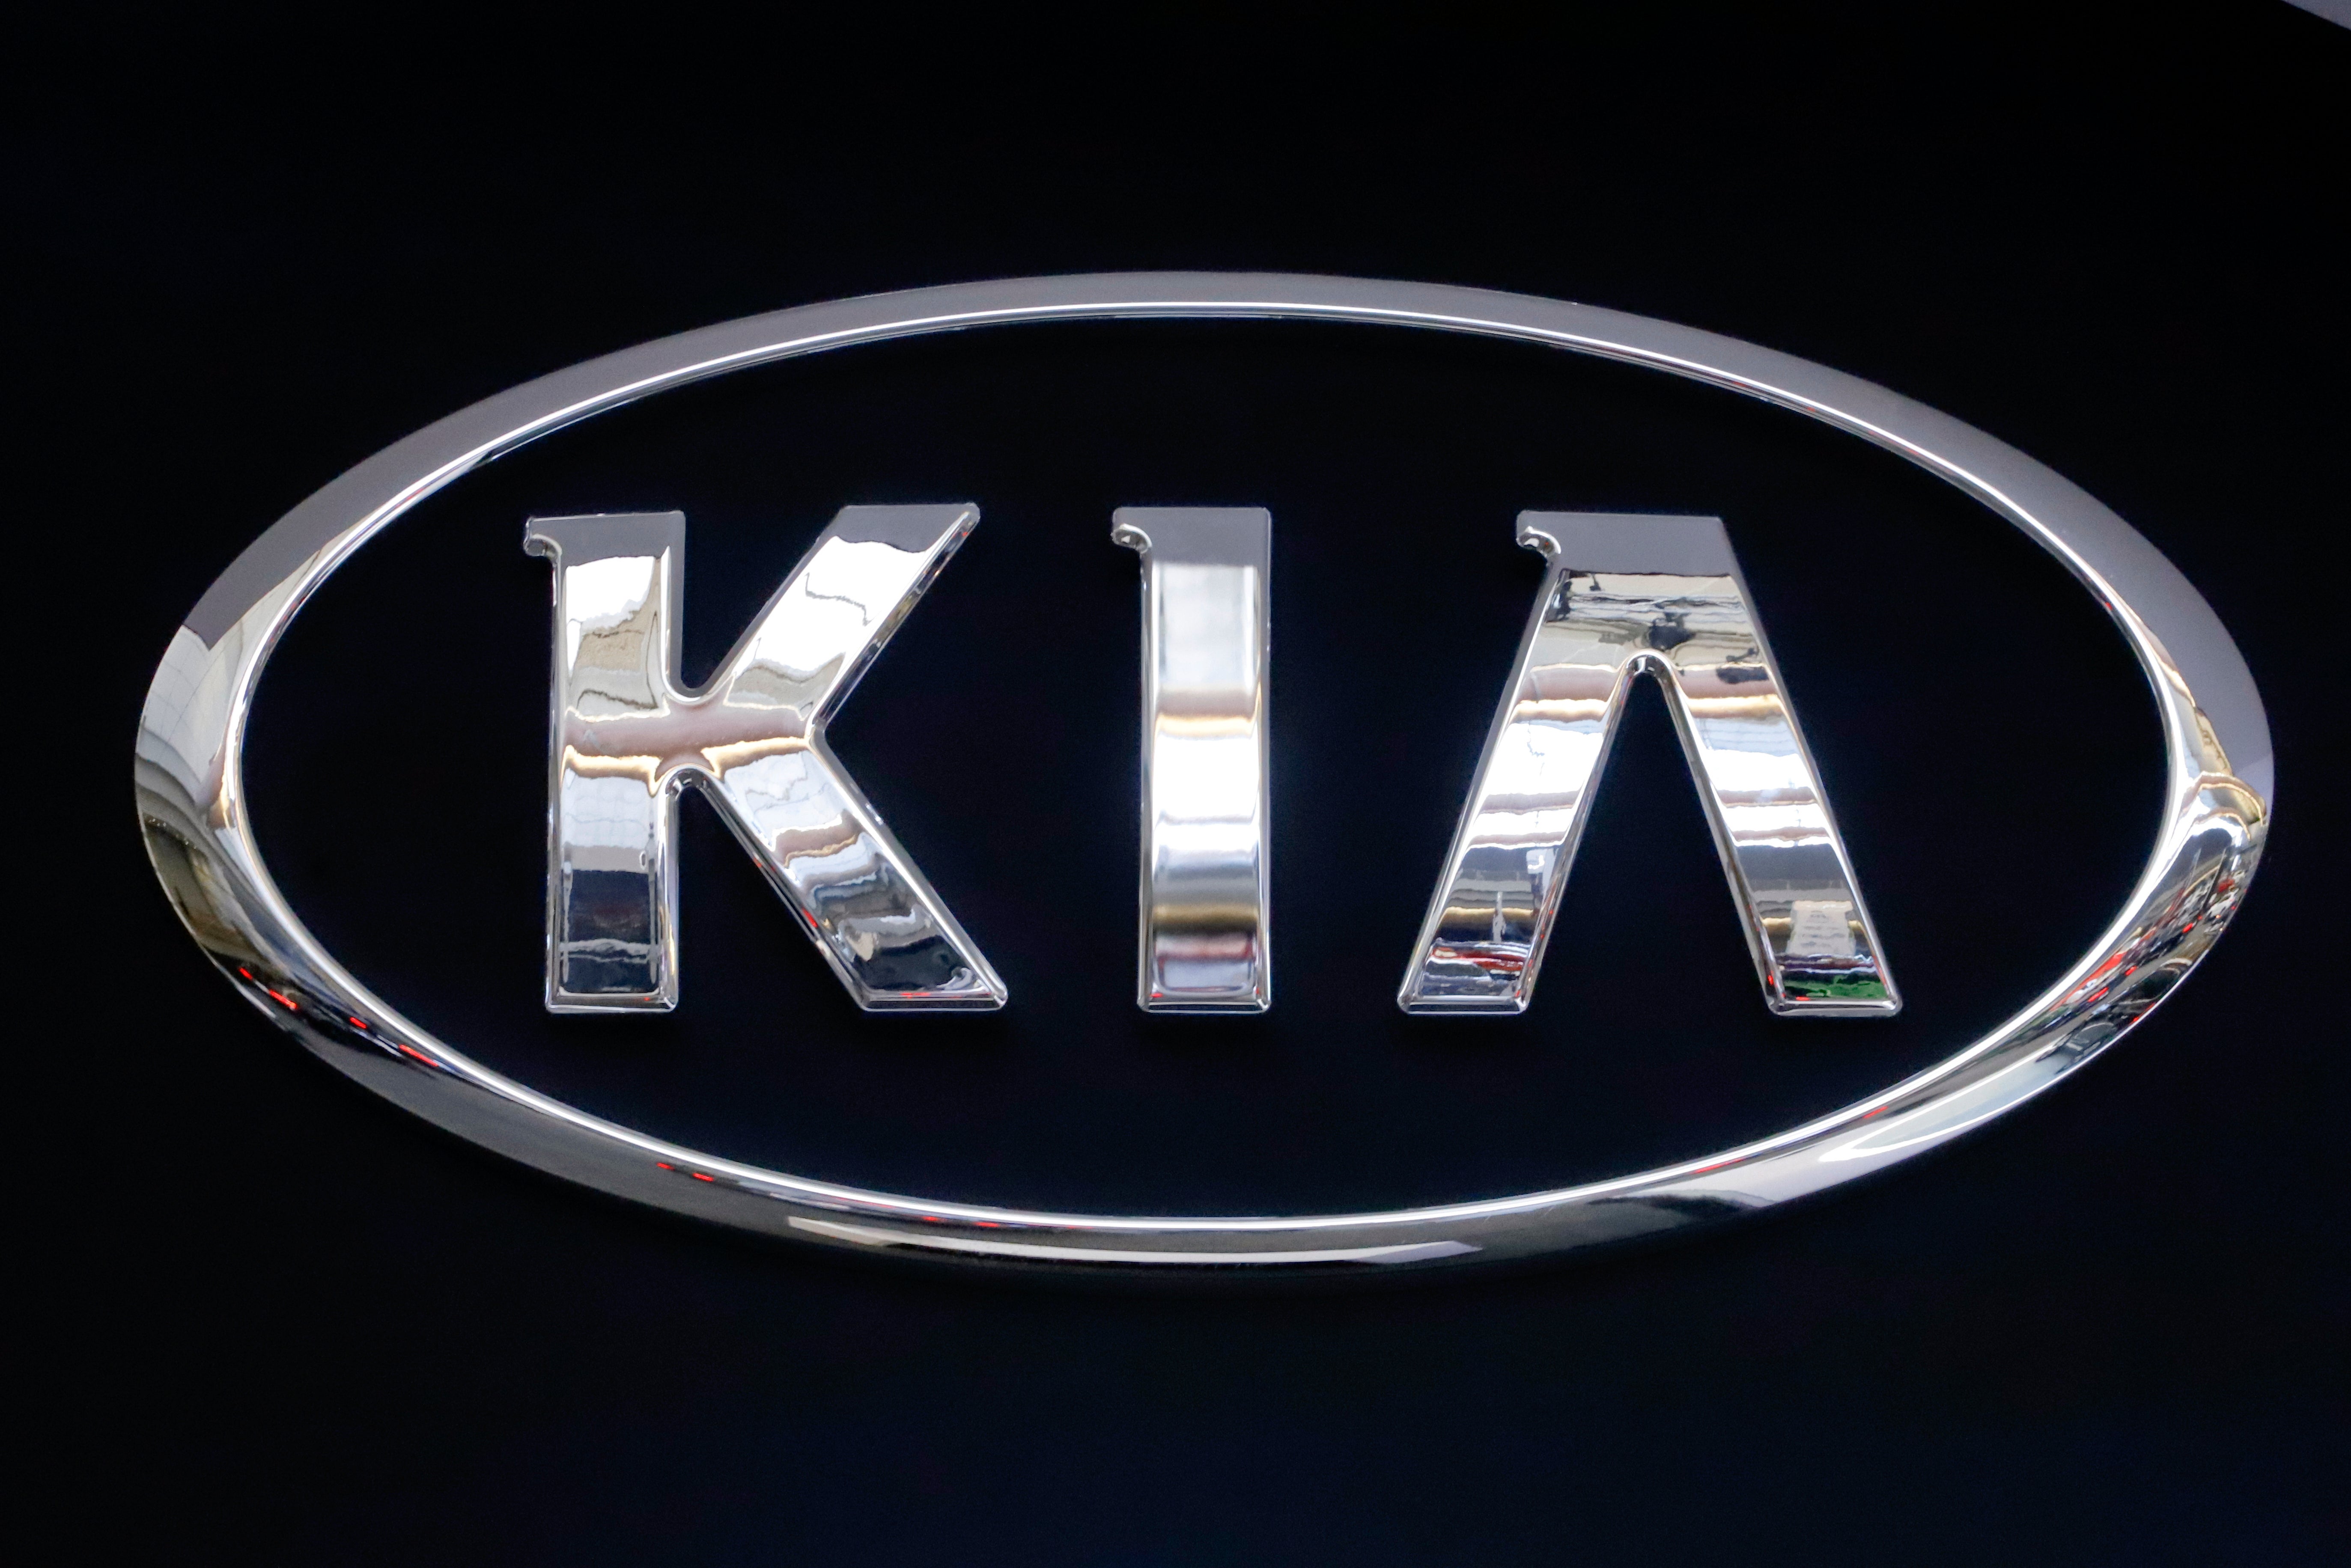 Kia recalls 380,000 vehicles over fire risk, advises drivers to park